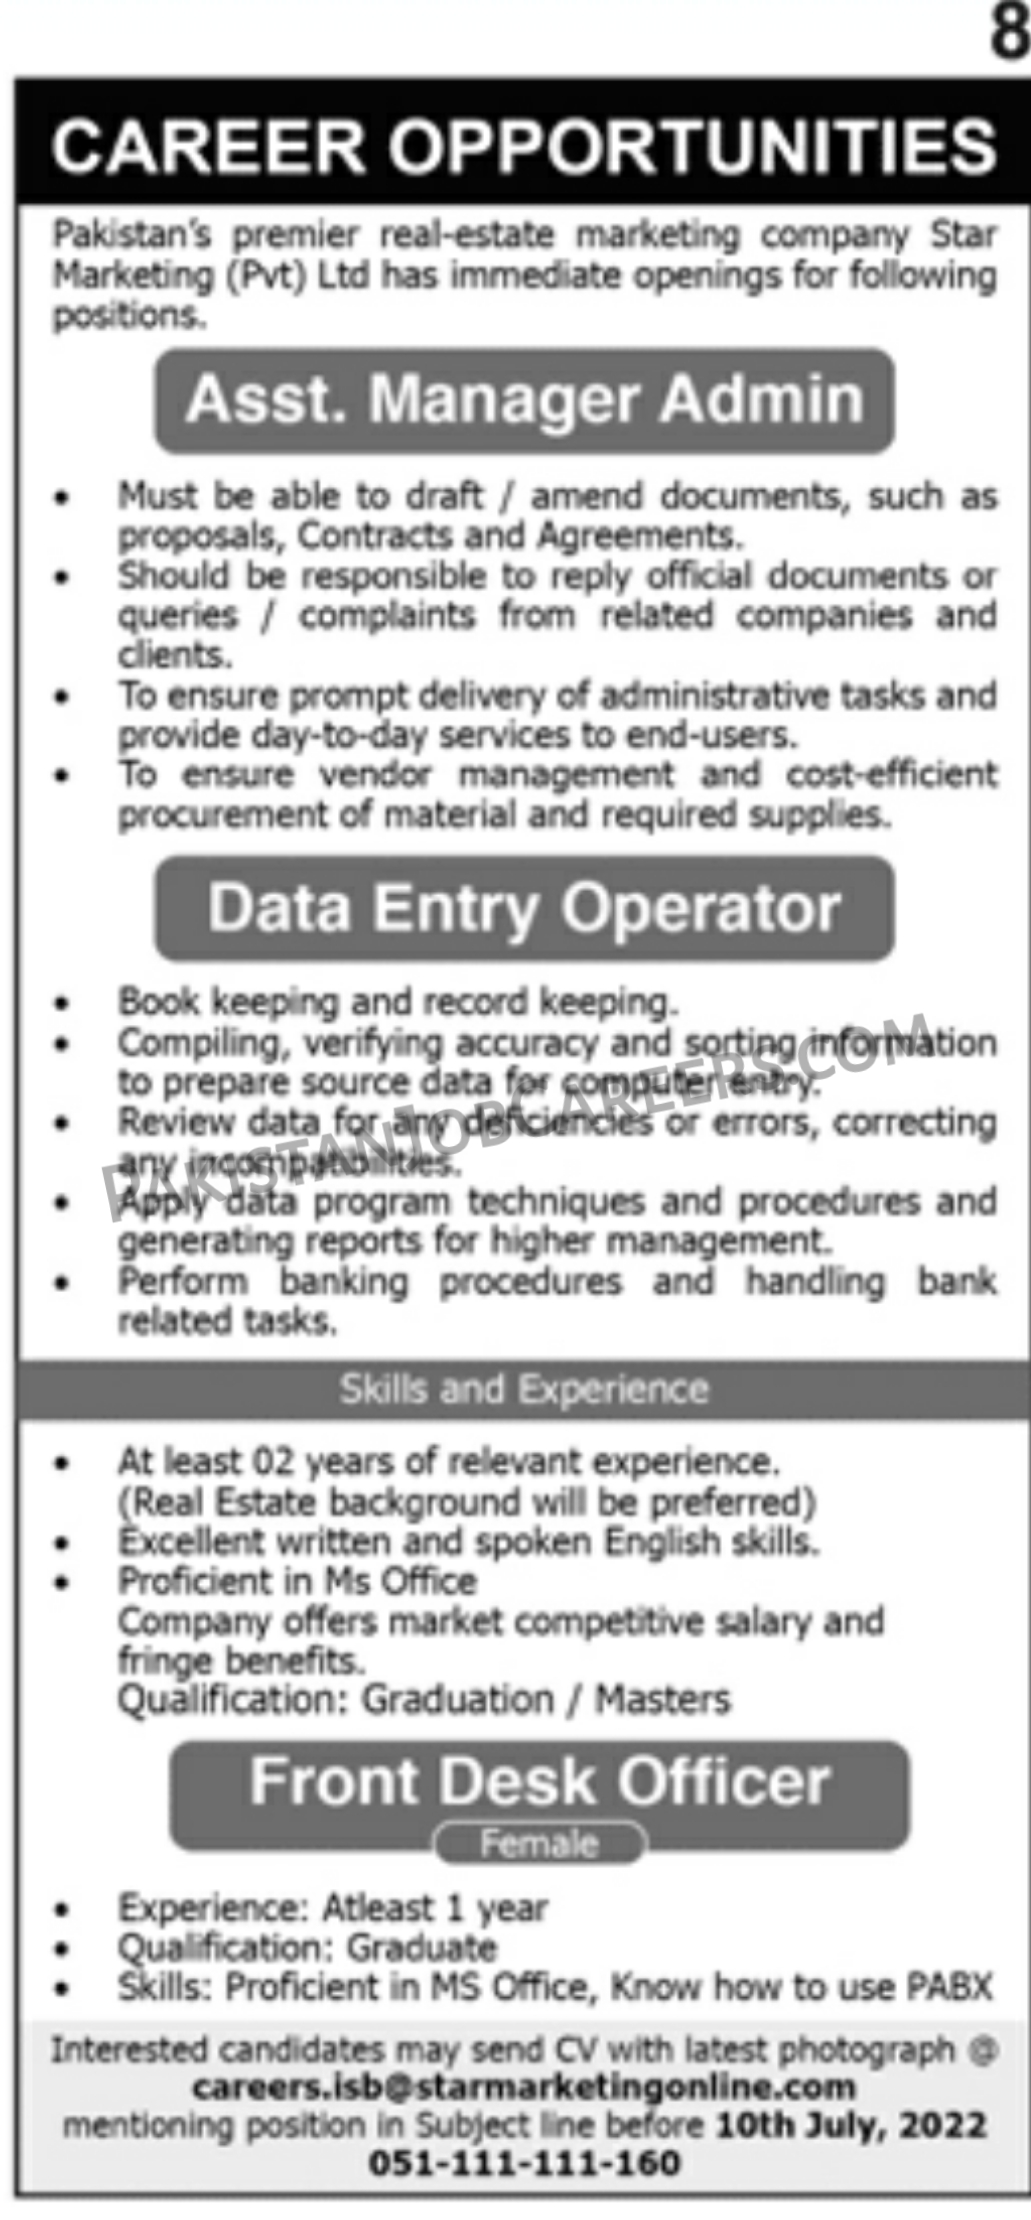 Star Marketing Pvt Ltd Jobs 2022 For Assist. Manager Admin, Data Entry Operator, Front Desk Officer Latest